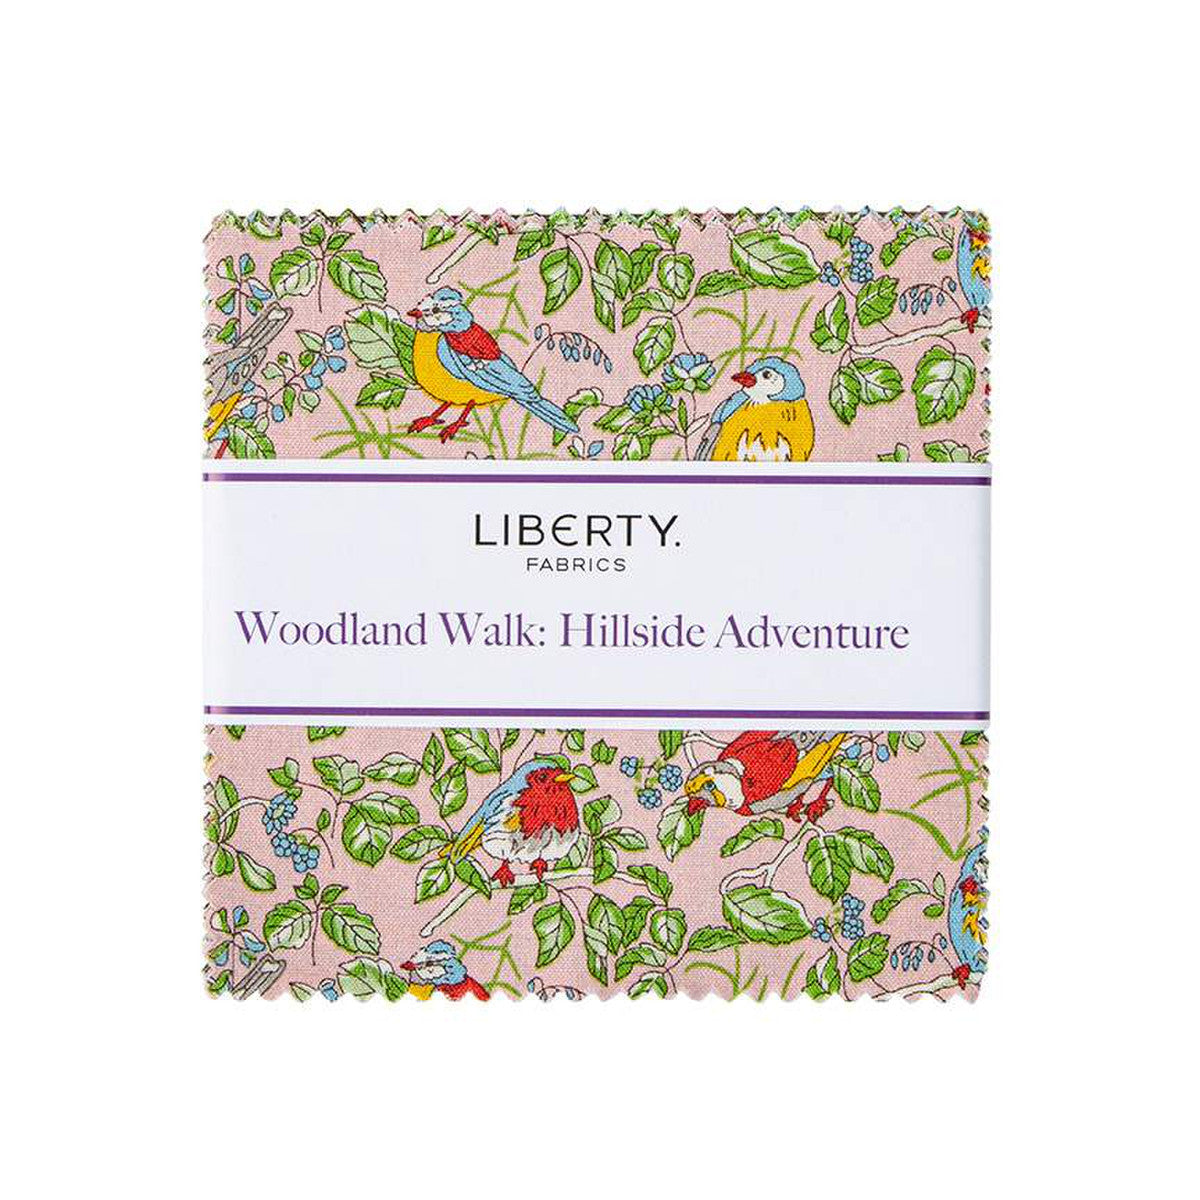 Woodland Walk / Hillside Adventure by Liberty Fabrics